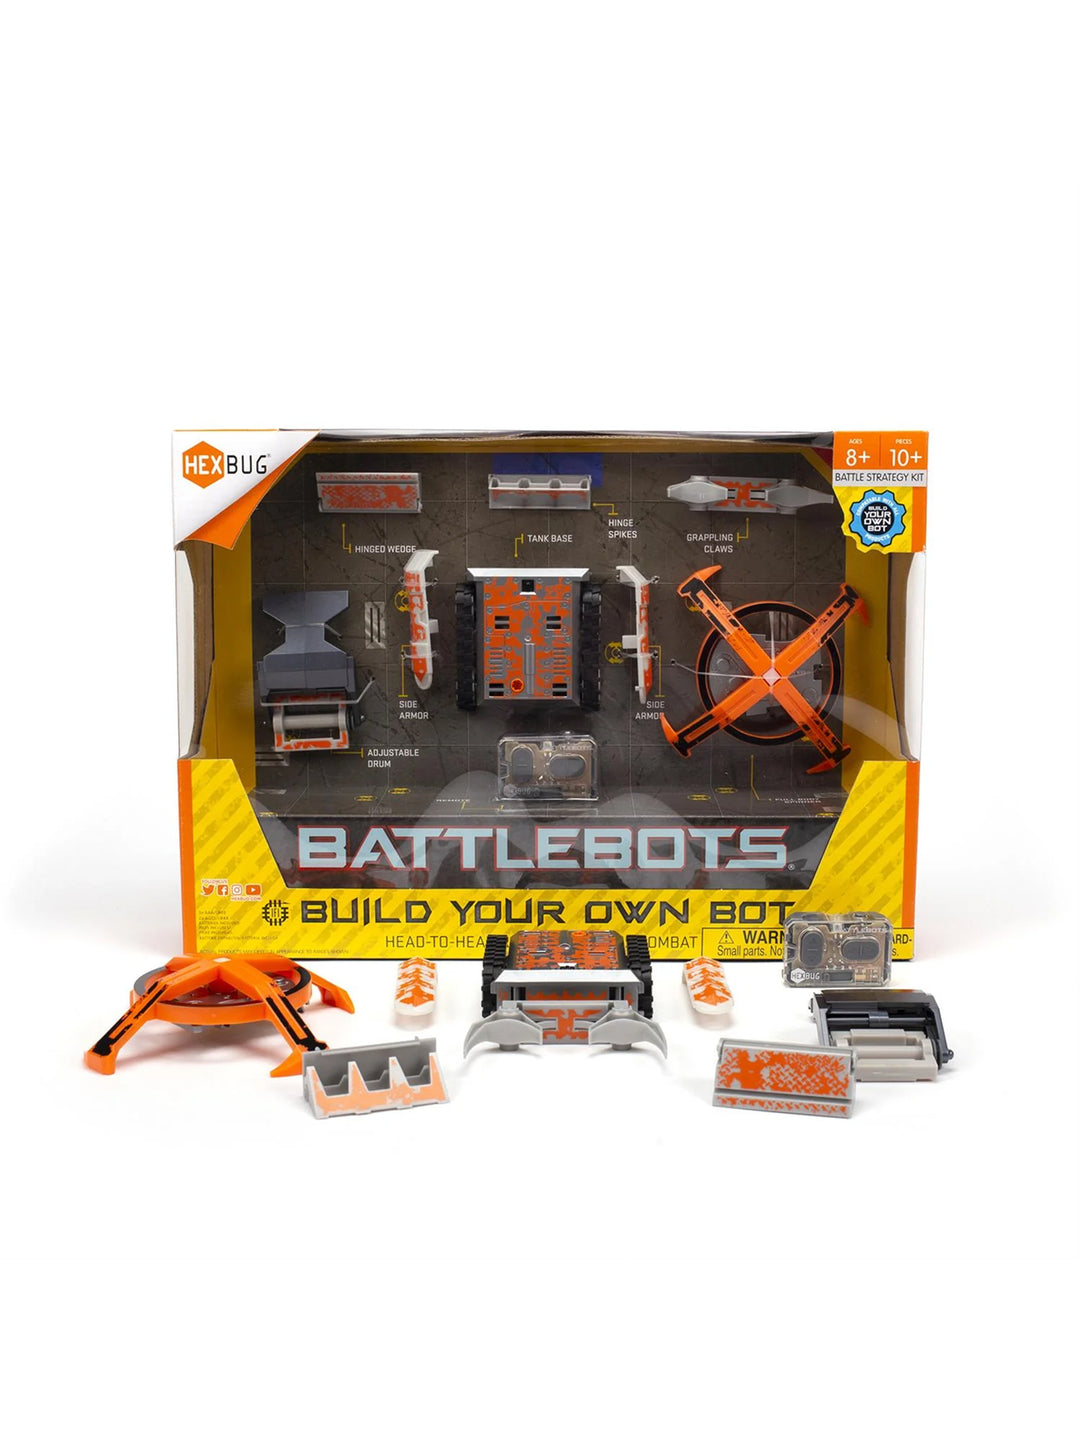 Hex Bug Battlebots Build Your Own Bot